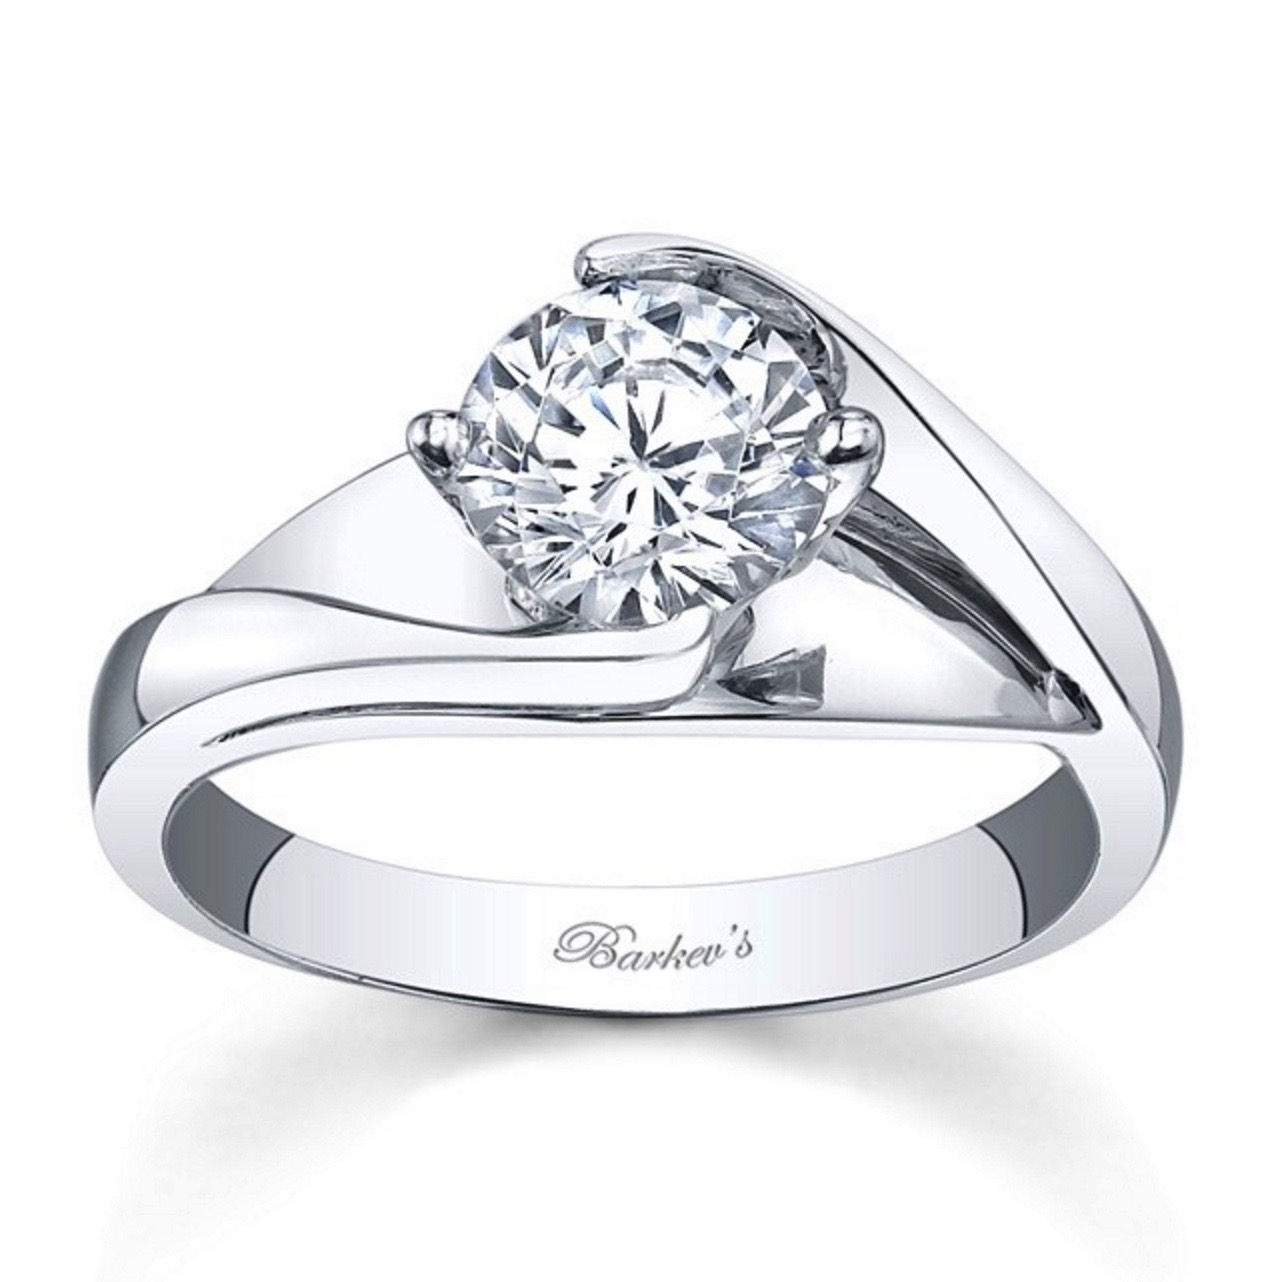 Diamond Engagement Ring - Barkev White Gold Solitaire